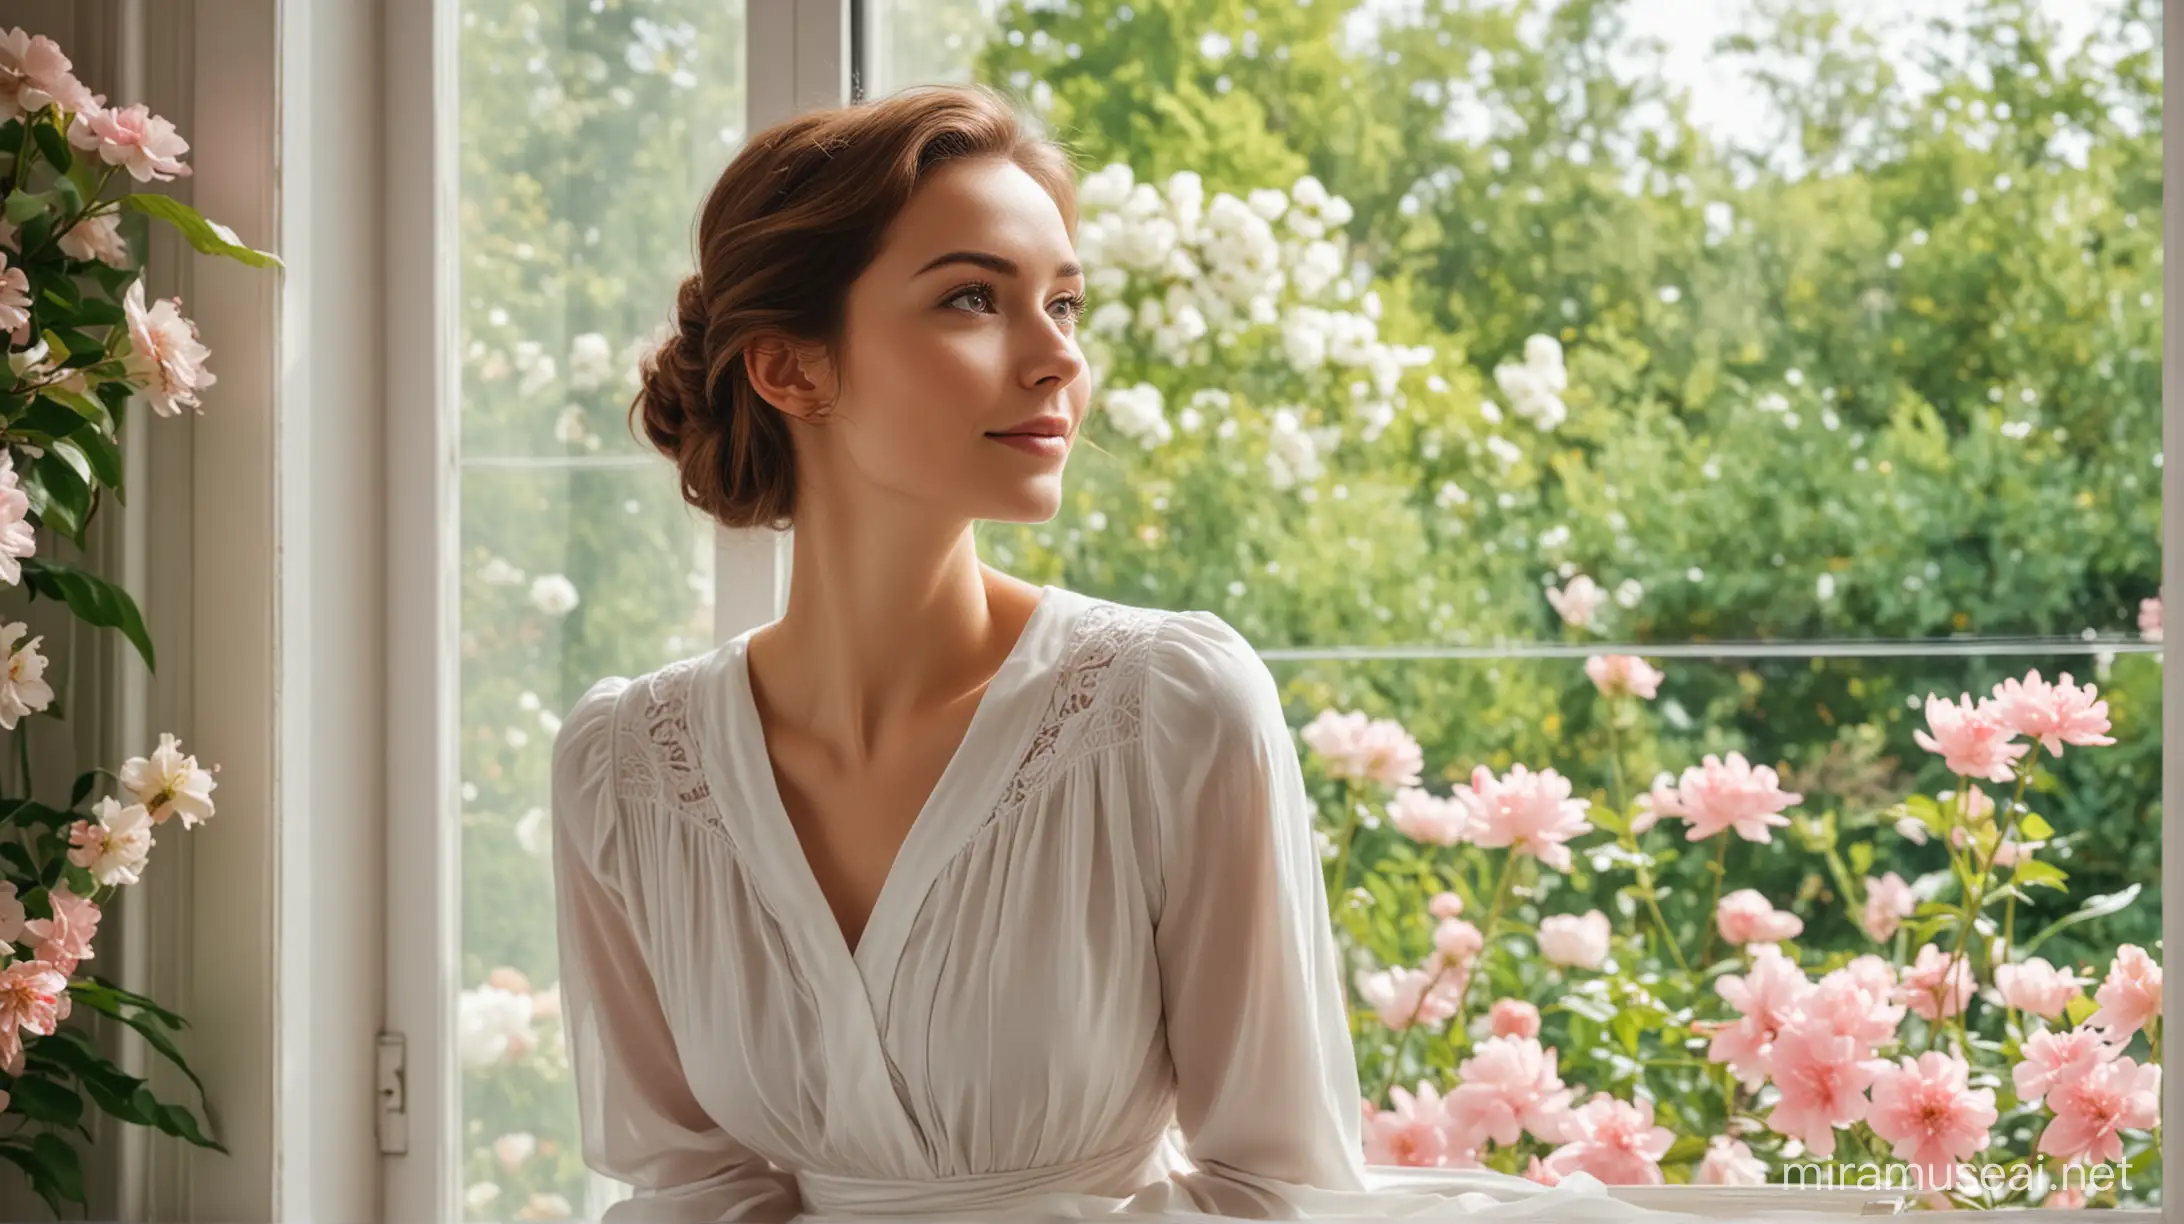 Joyful Woman in White Dress Admiring Blooming Garden from Window